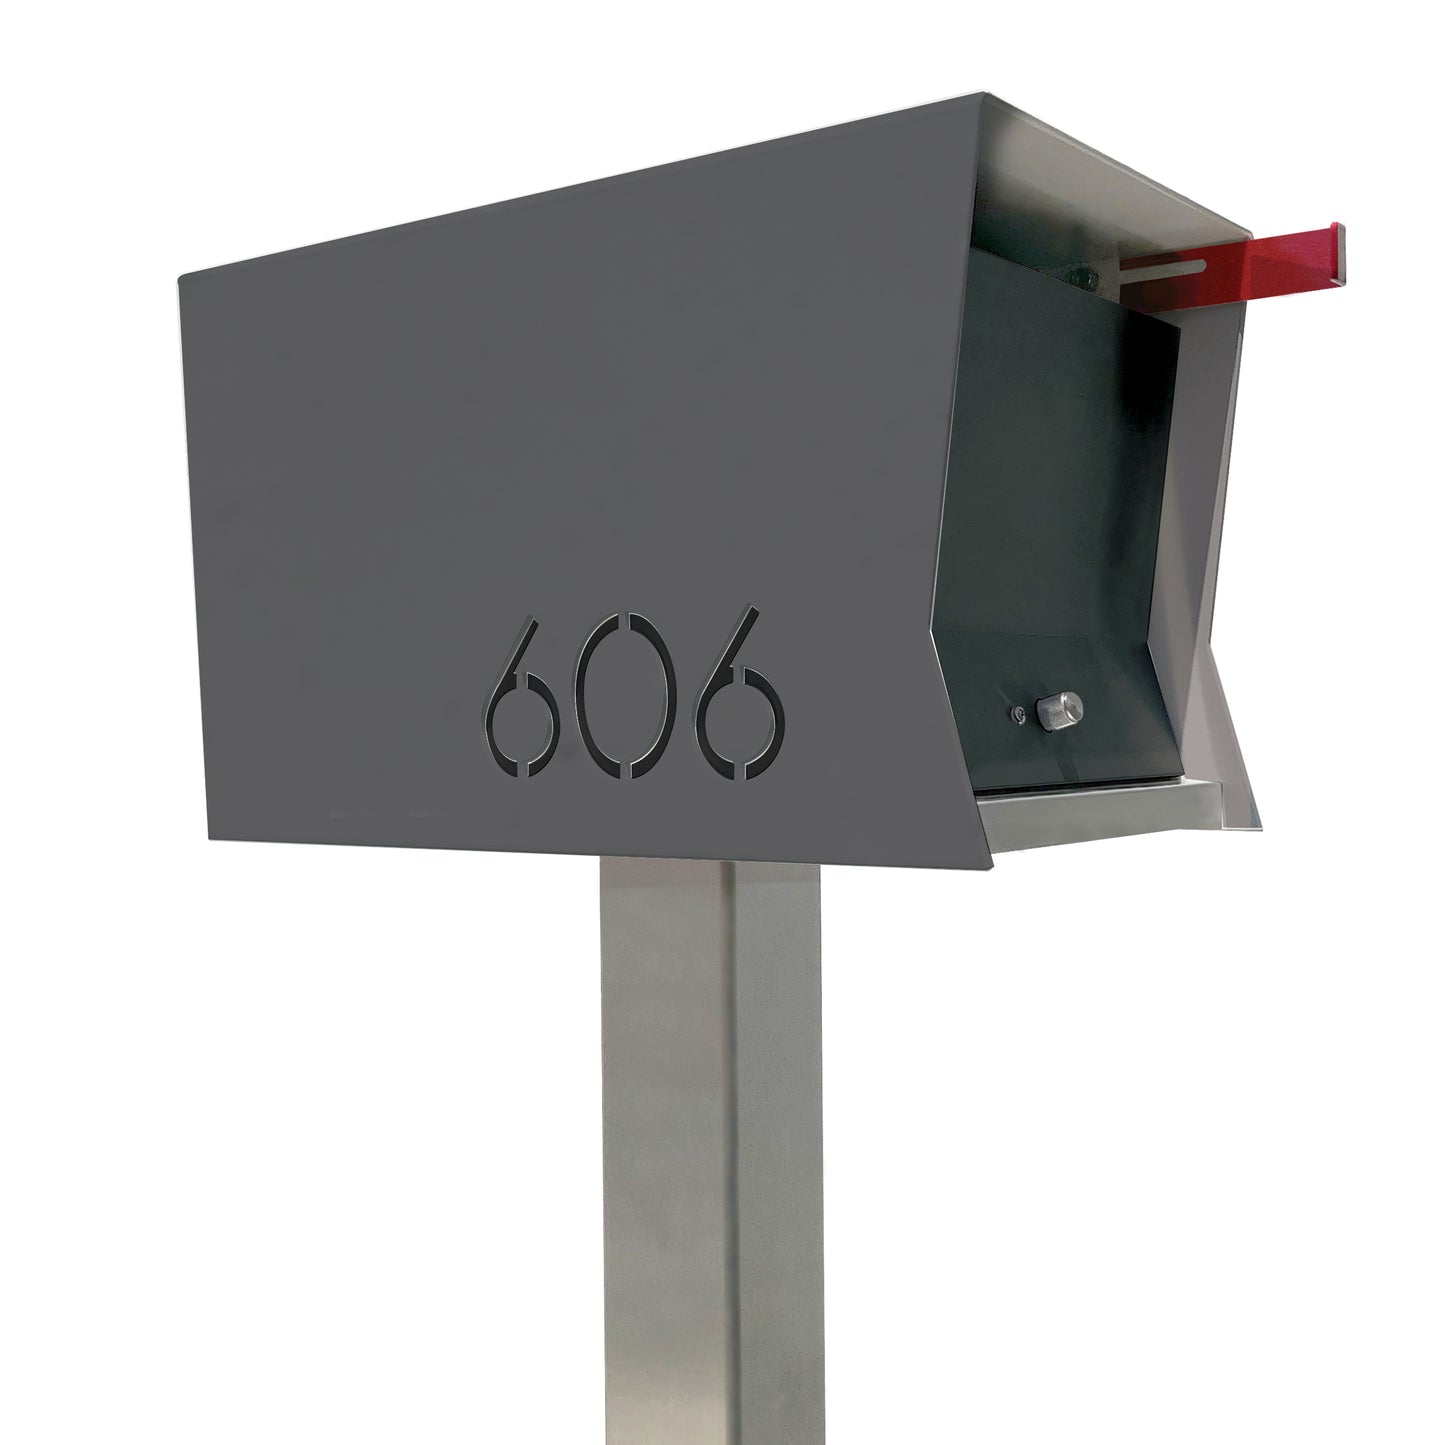 The Original Retrobox in DESIGNER GREY - Modern Mailbox